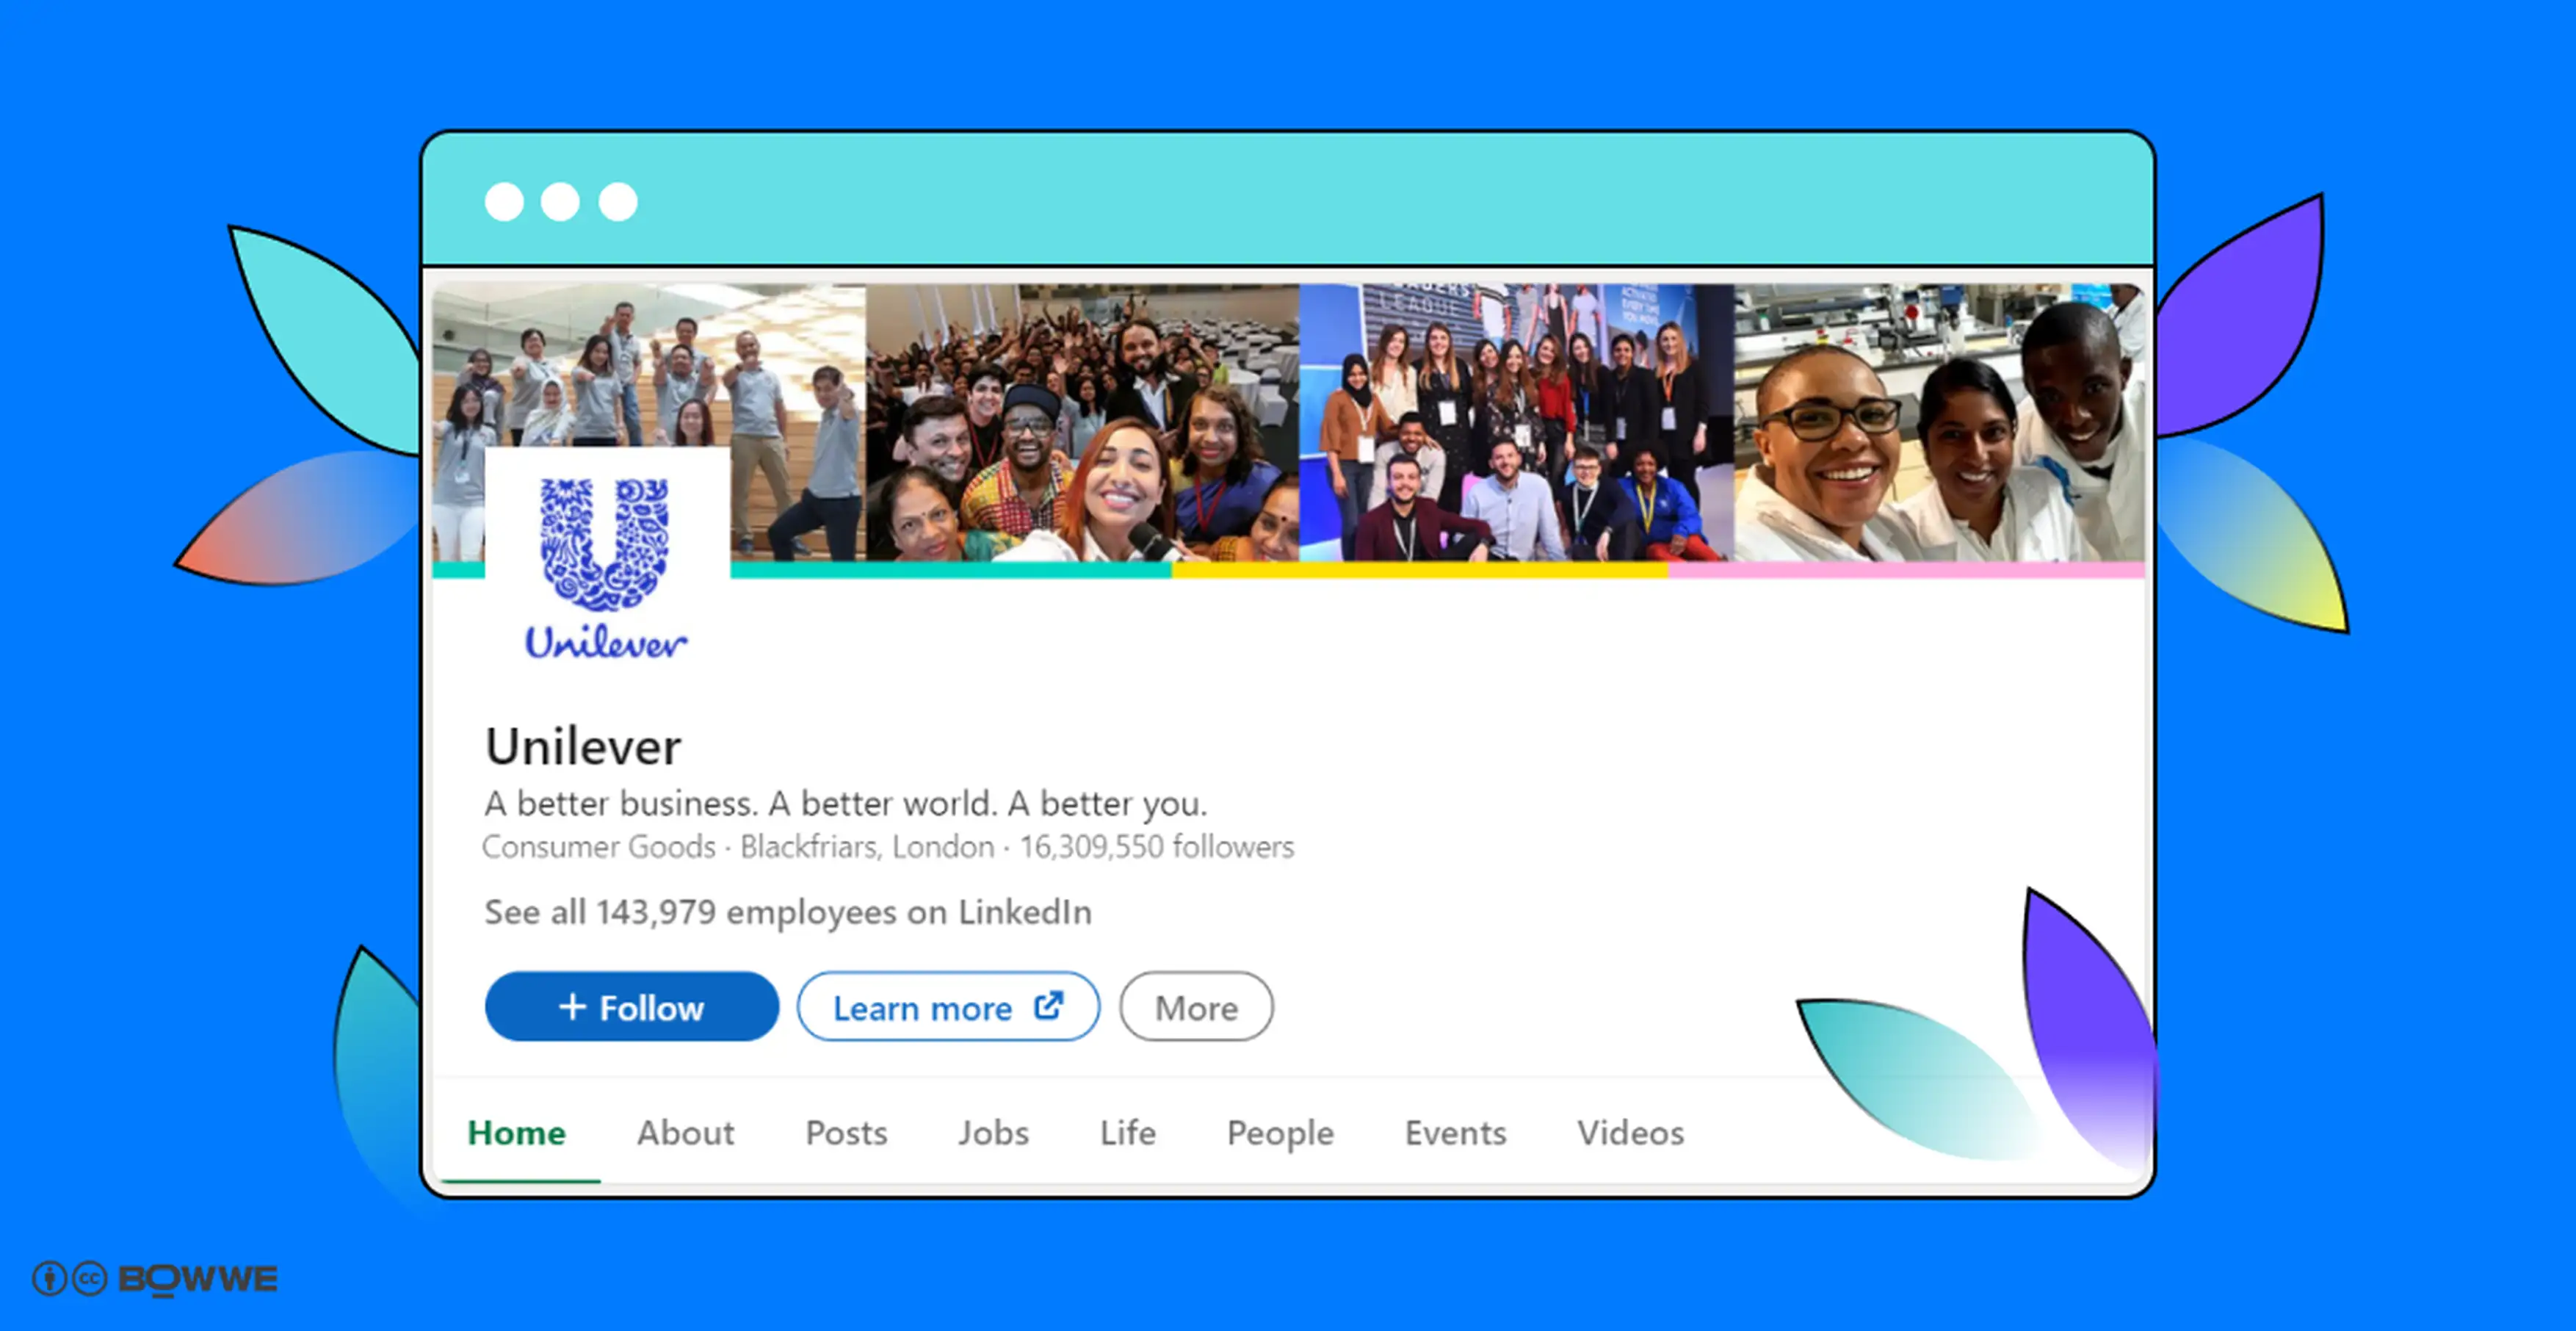 Unilever profile on LinkedIn